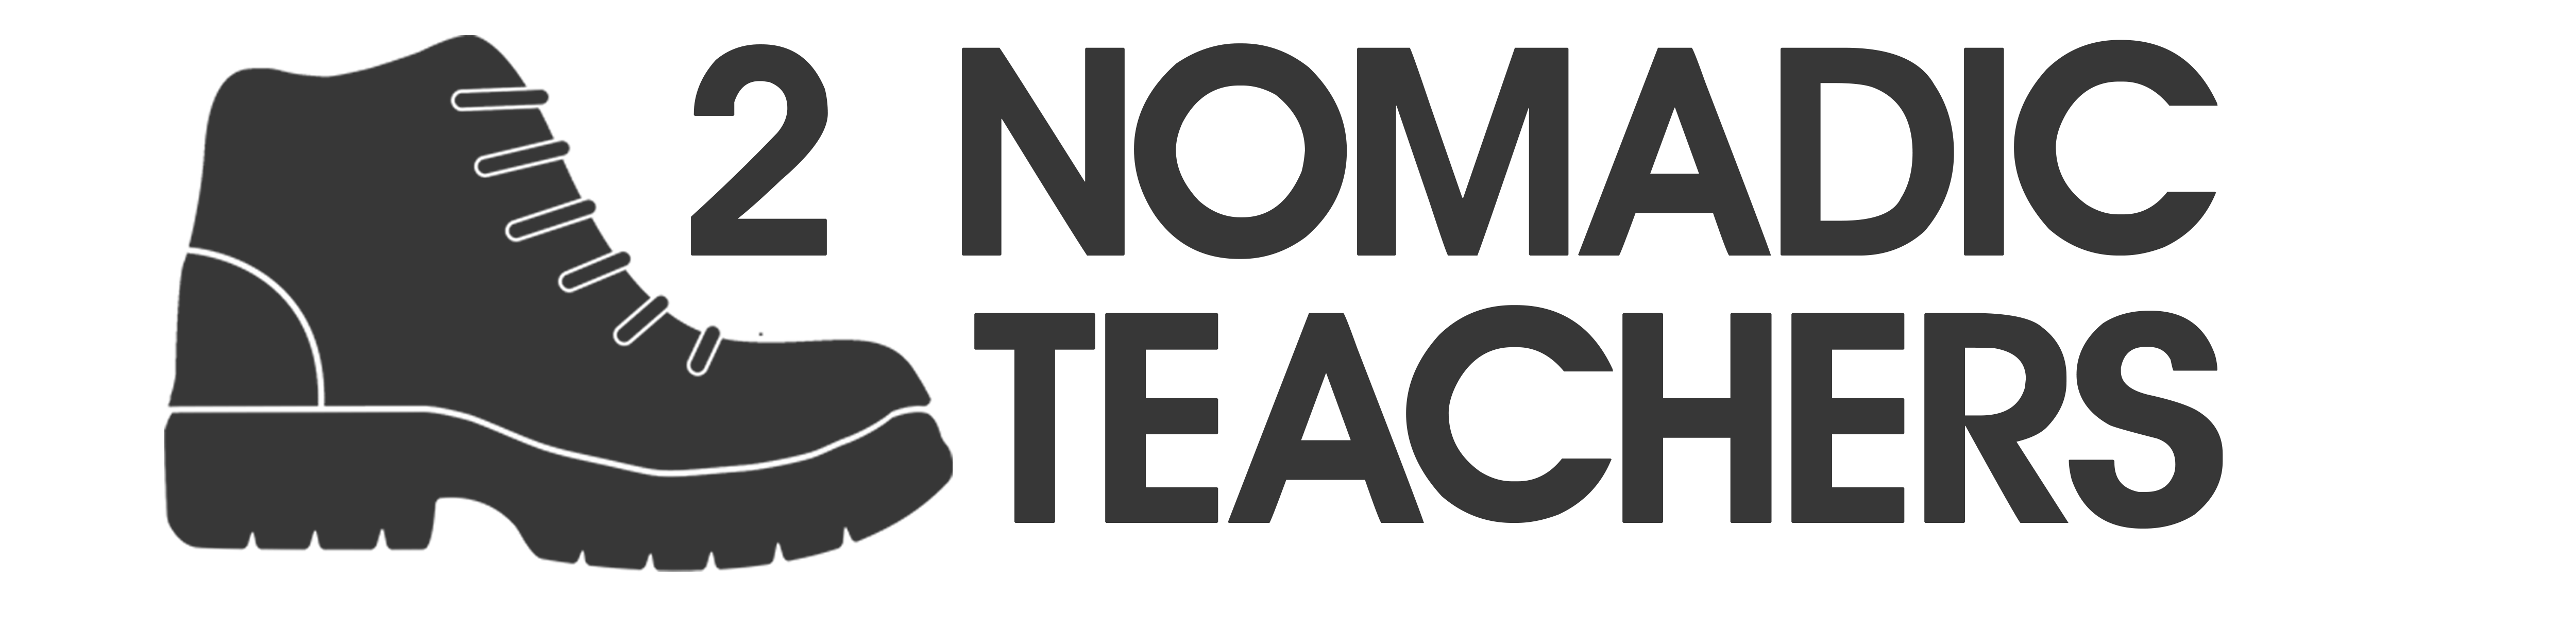 2 Nomadic Teachers